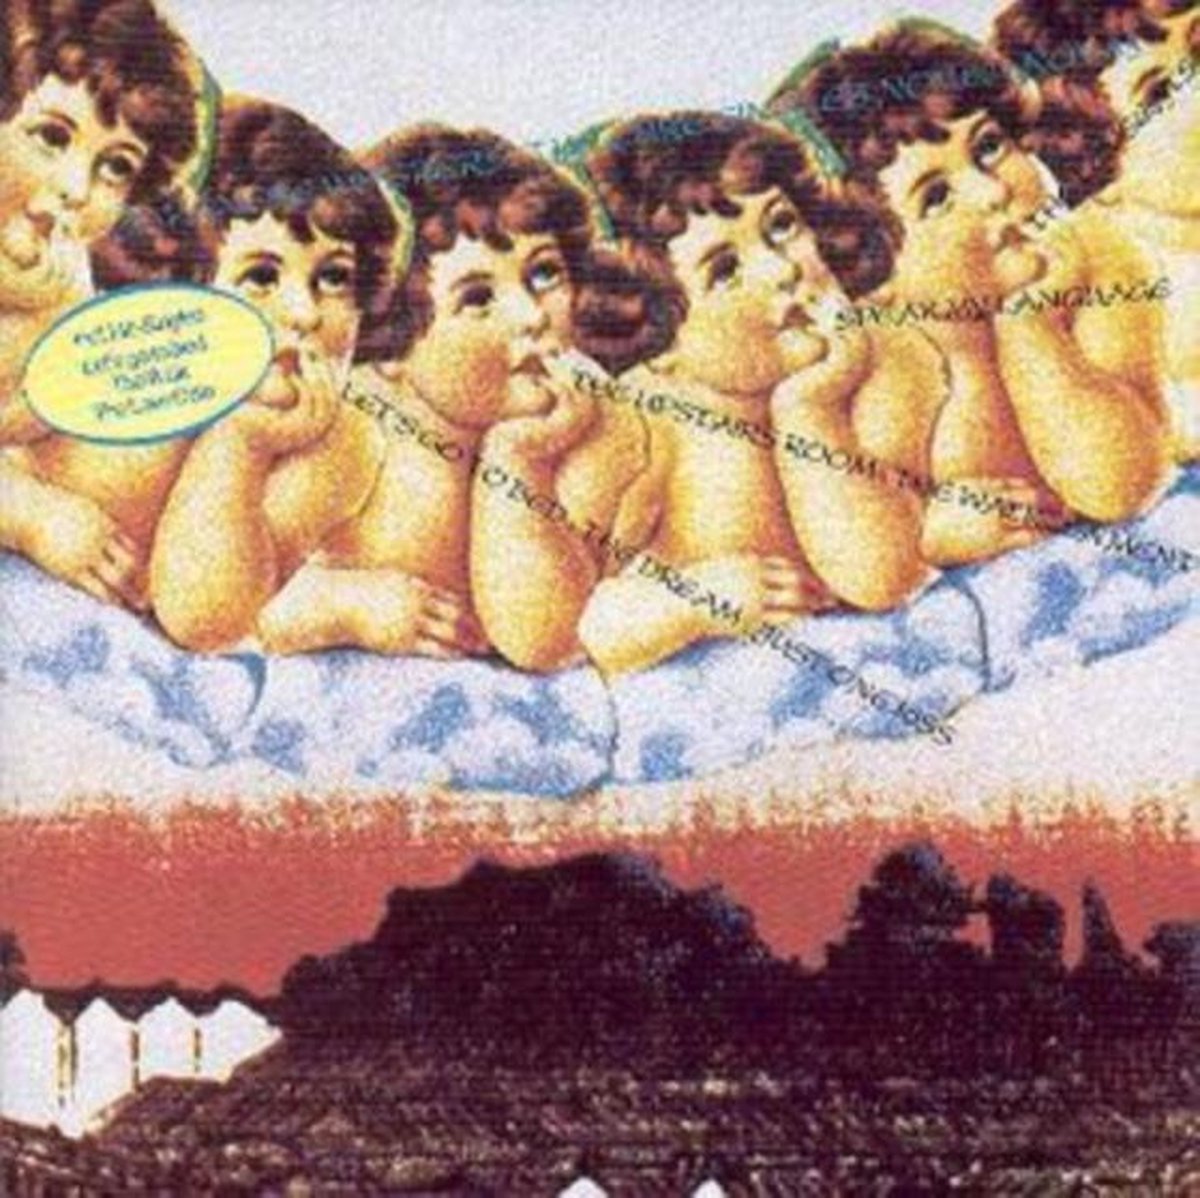 The Cure - Japanese Whispers [Import] (CD) - Amoeba Music